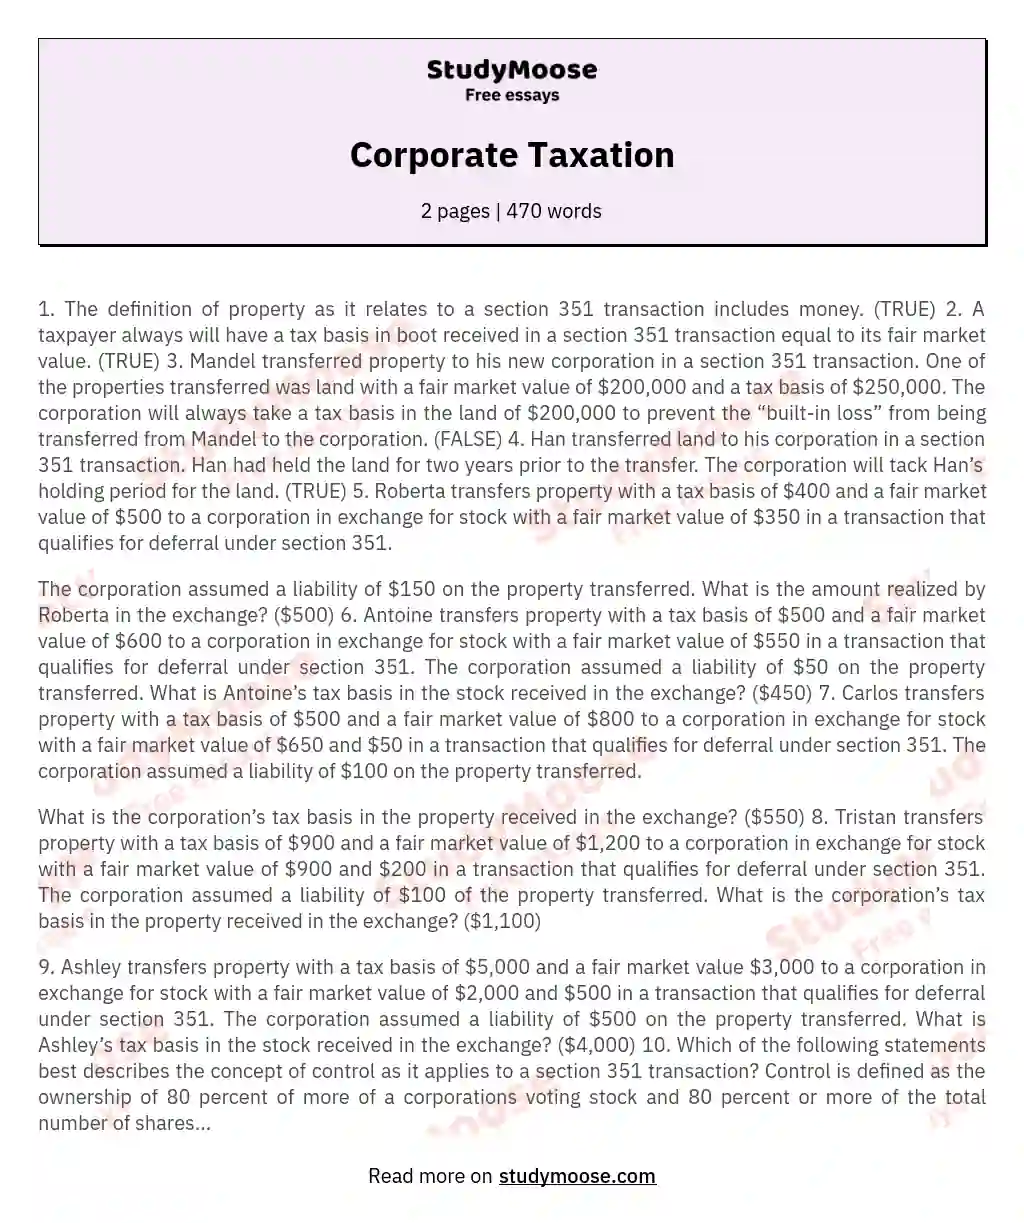 Corporate Taxation essay